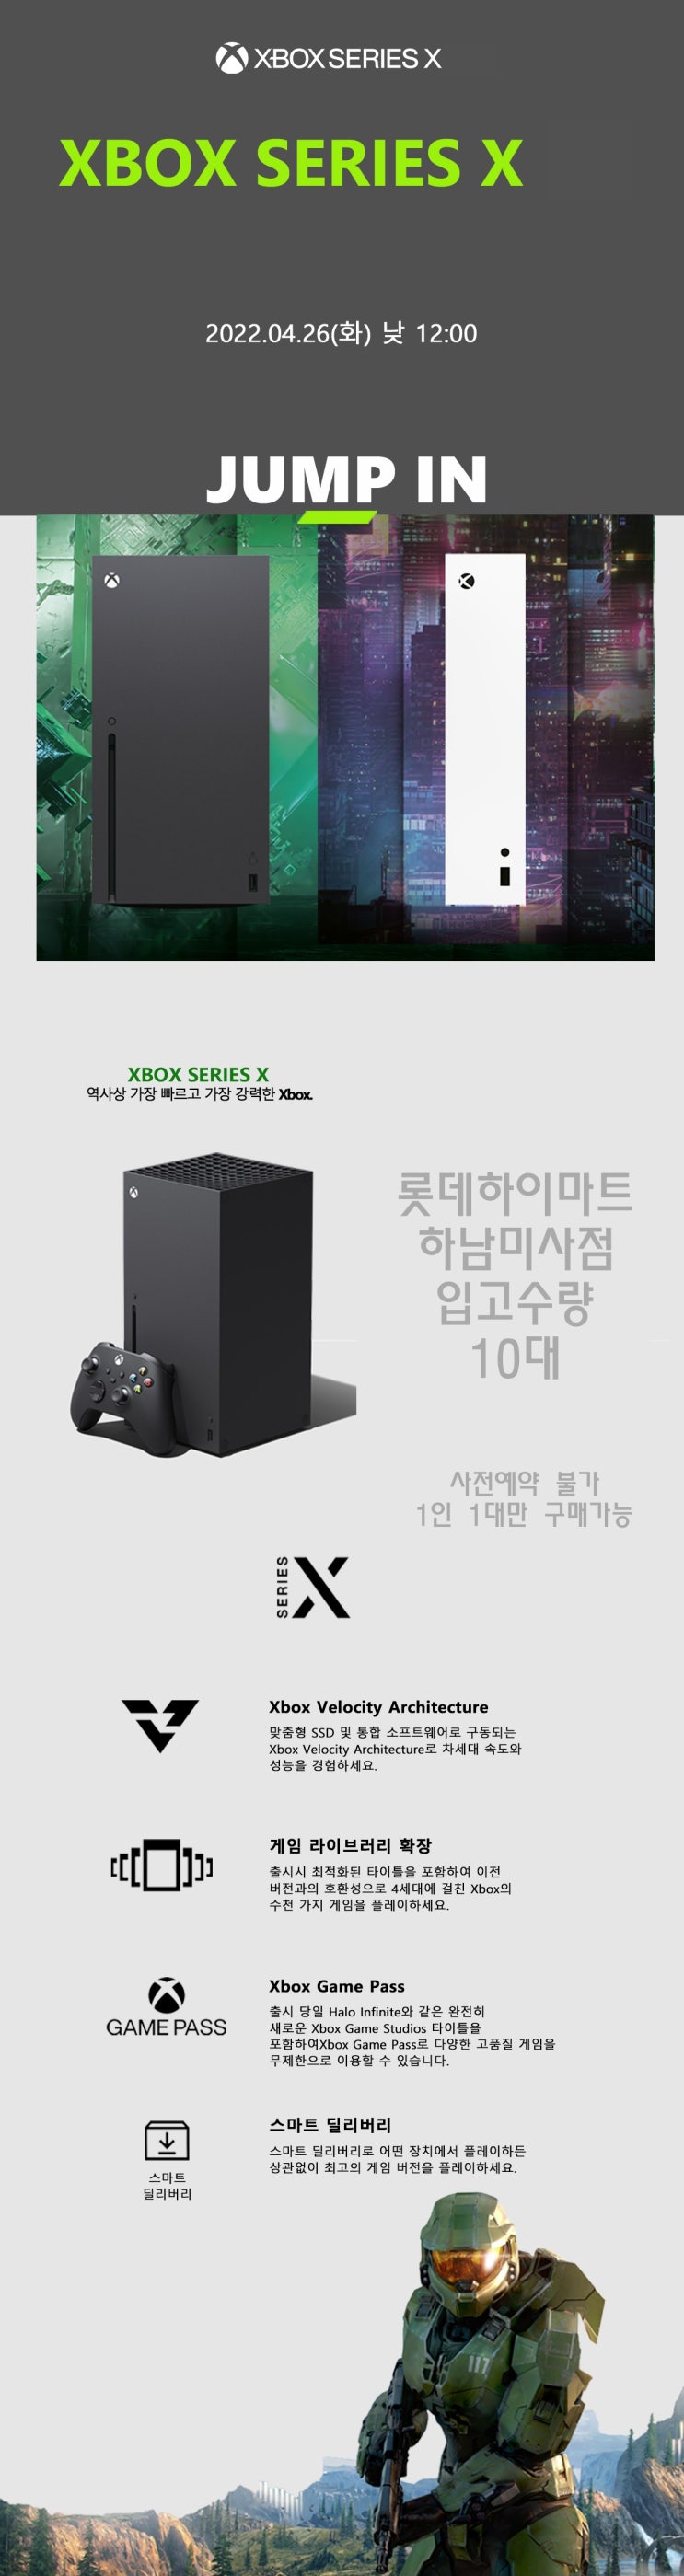 X박스 시리즈X 입고 정보 내일(2022.4.26일) 낮 12시 이후 XBOX SERIES X